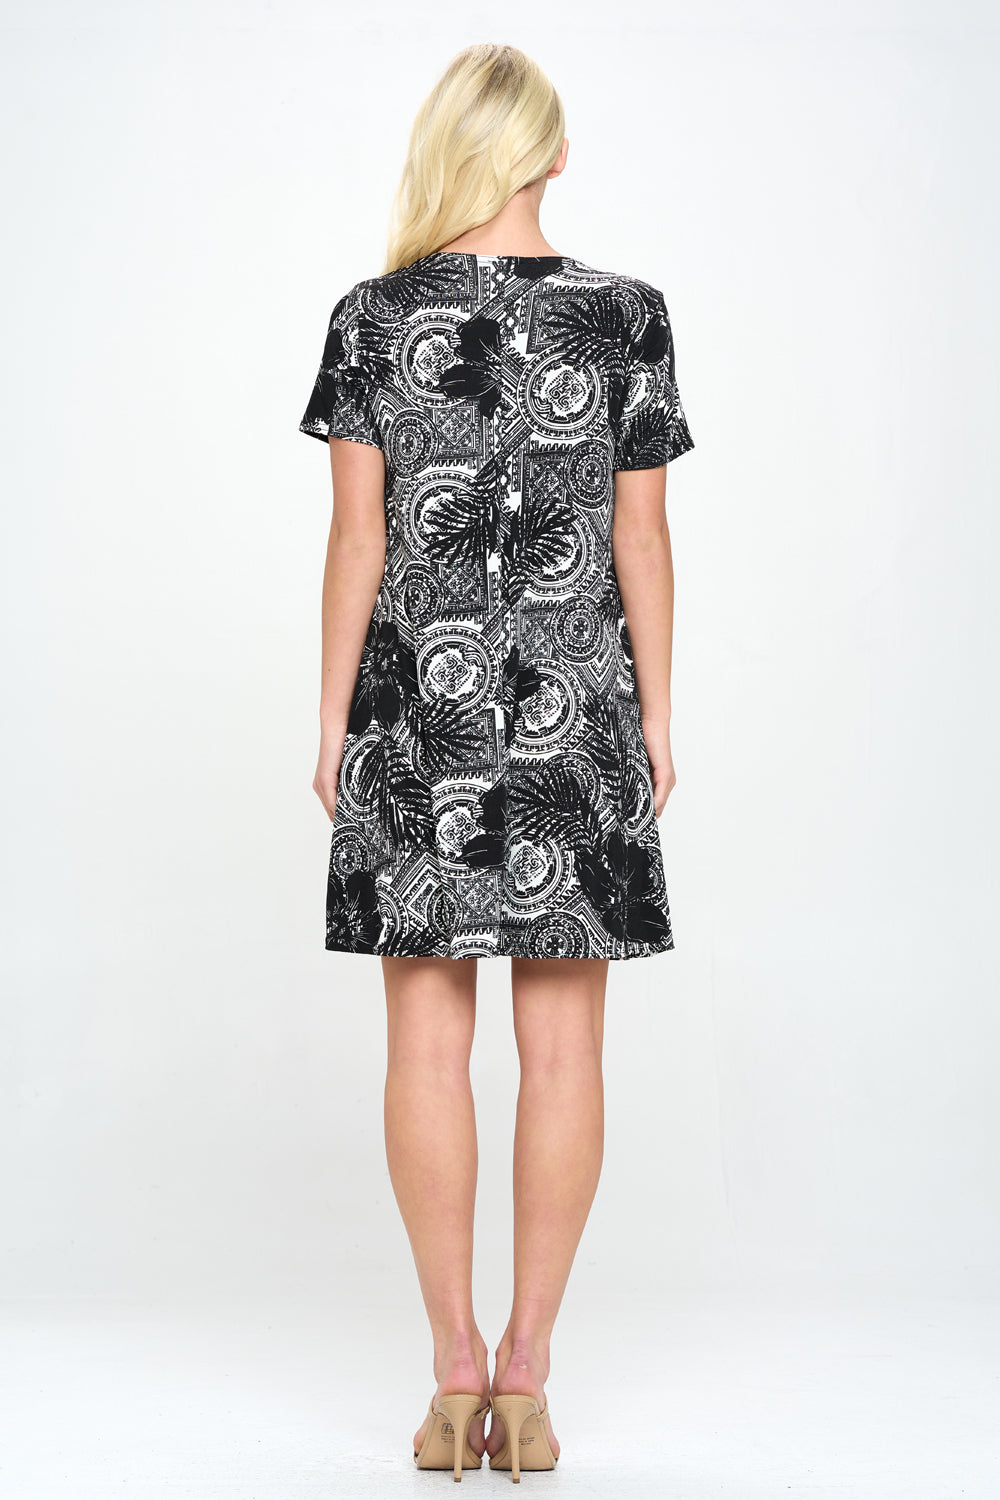 BNS Missy Dress Short Sleeve Print-7004BN-SRP1-W325